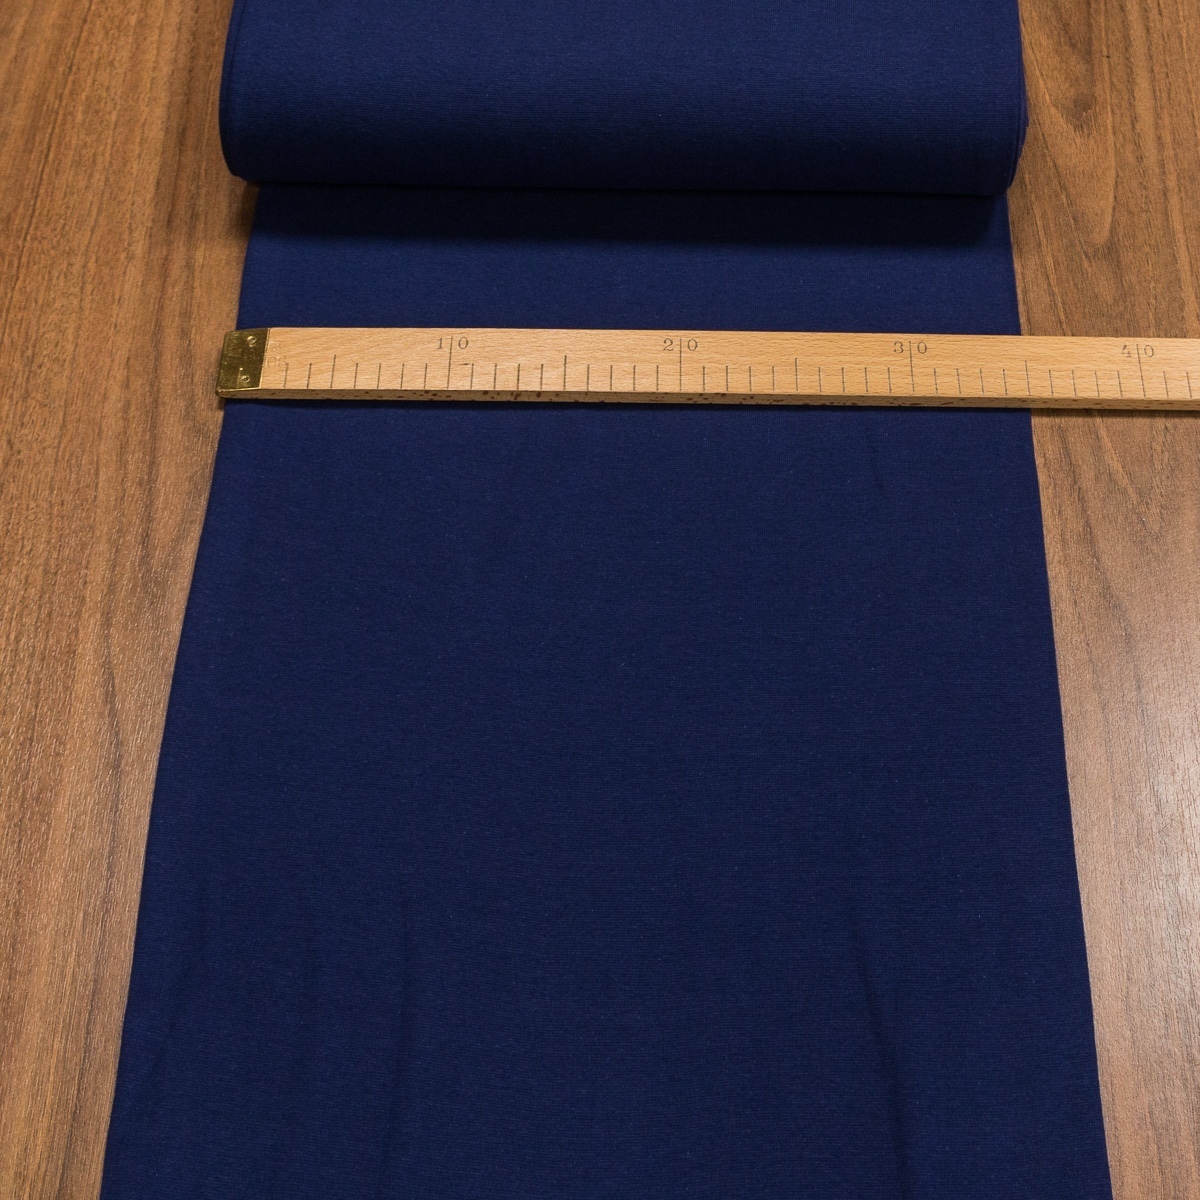 Žebrovaný bavlněný úplet 6201/0807 jemný / hladký, švestkově modrý, š.35cm (látka v metráži)